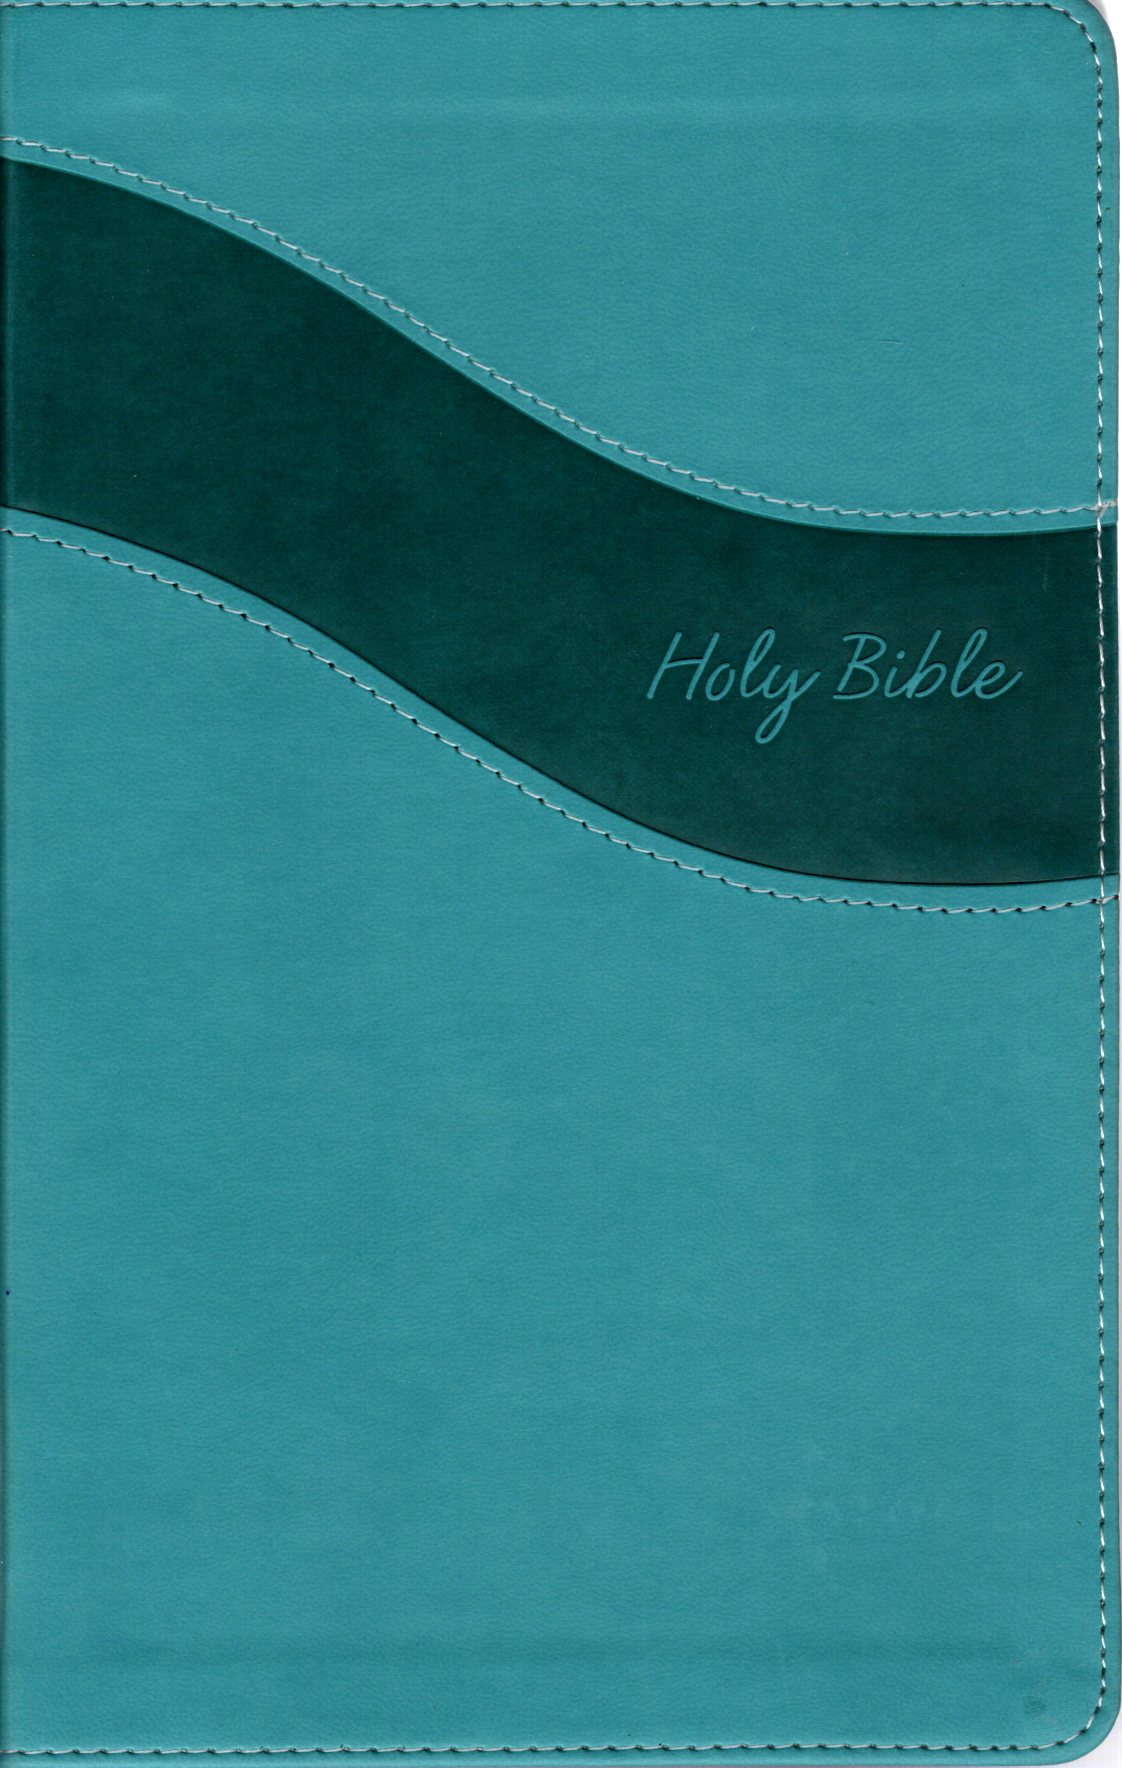 Zondervan NIV® Premium Gift Bible - Leathersoft™ (Turquoise)